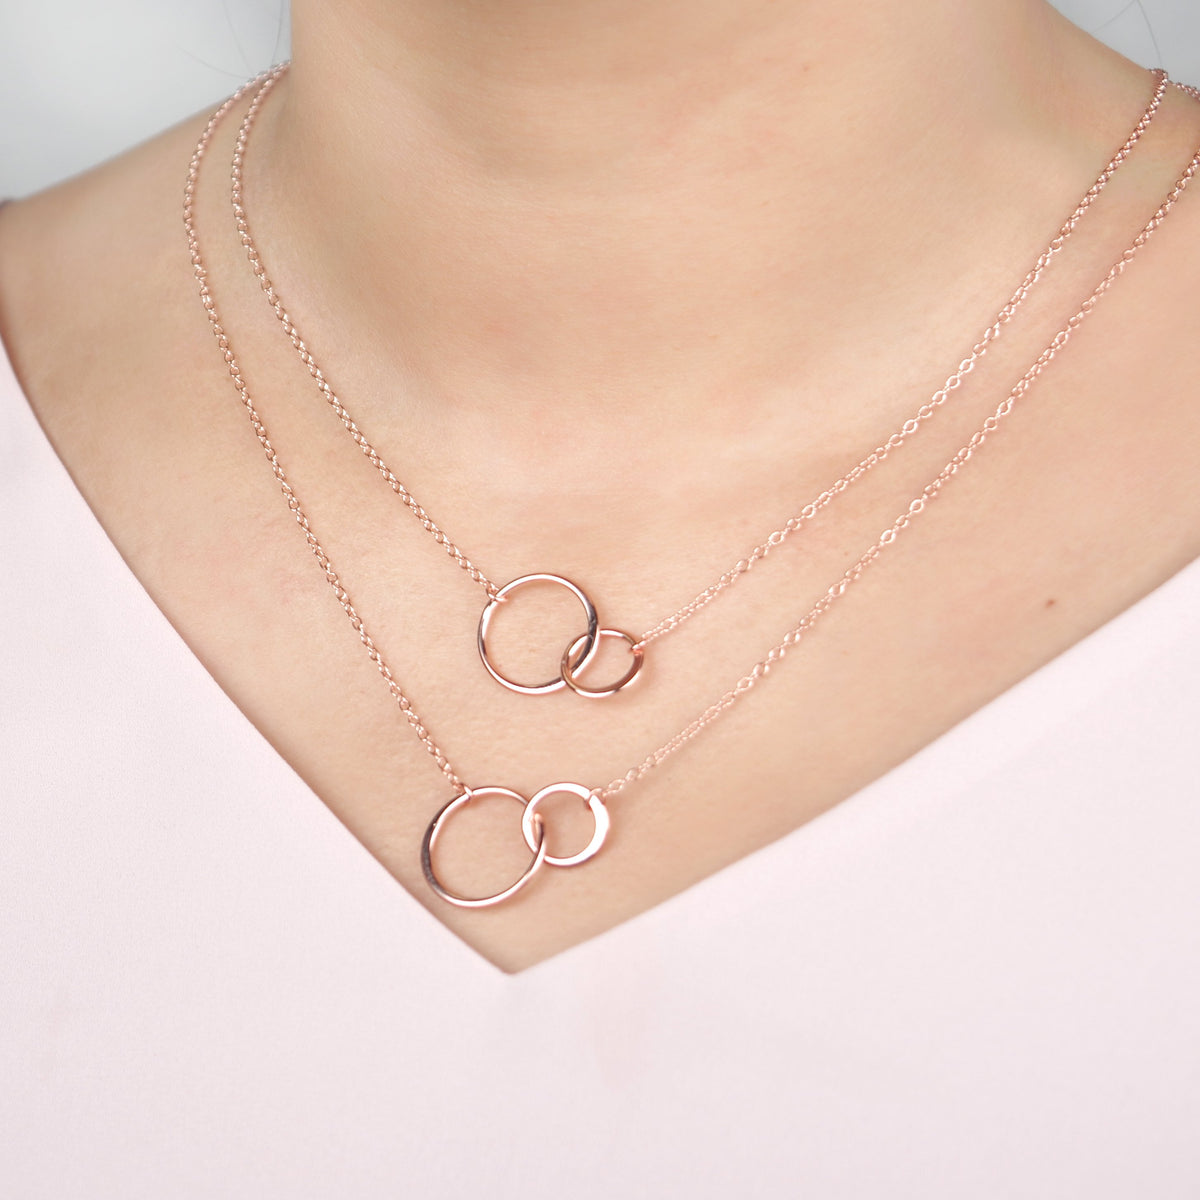 Best Friends Necklace - Dear Ava, Jewelry / Necklaces / Pendants